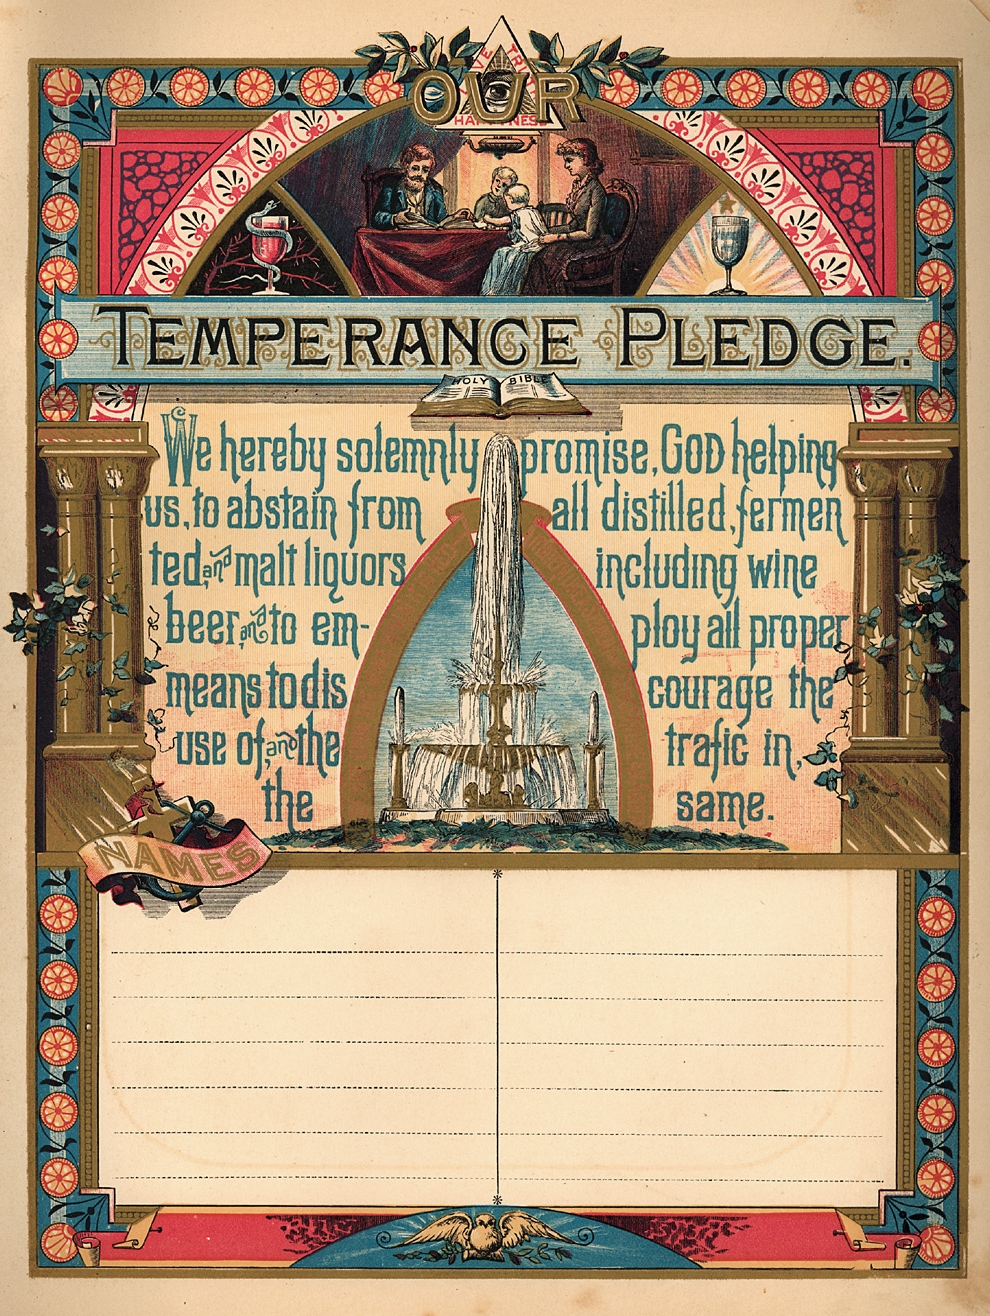 Jacob Rohrer Miller (1860-1950) Family Bible - Temperance Pledge